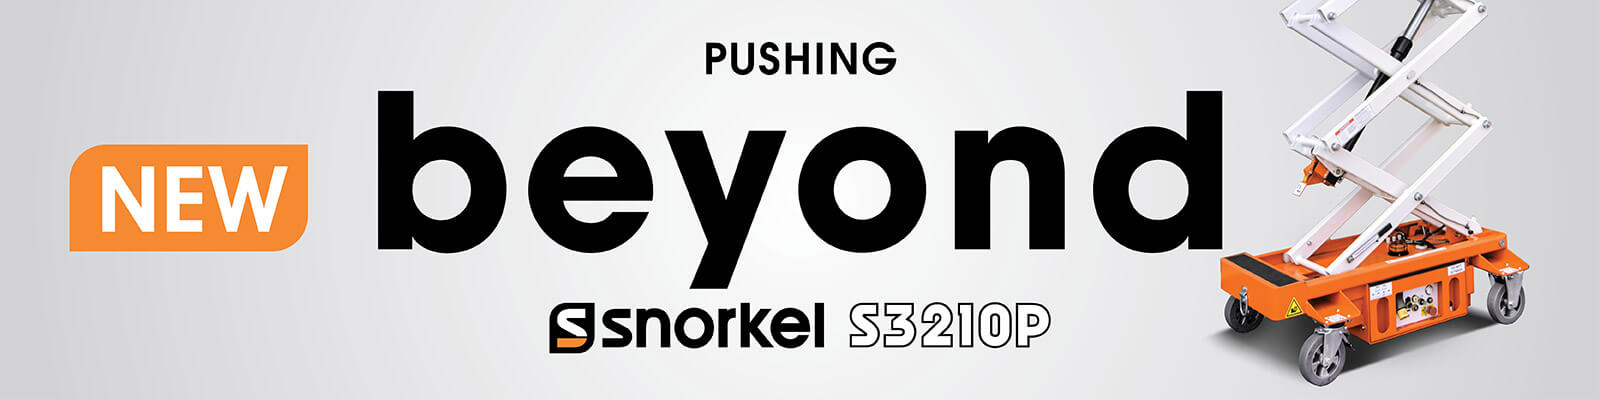 Pushing Beyond Snorkel S3210P push around scissor lift